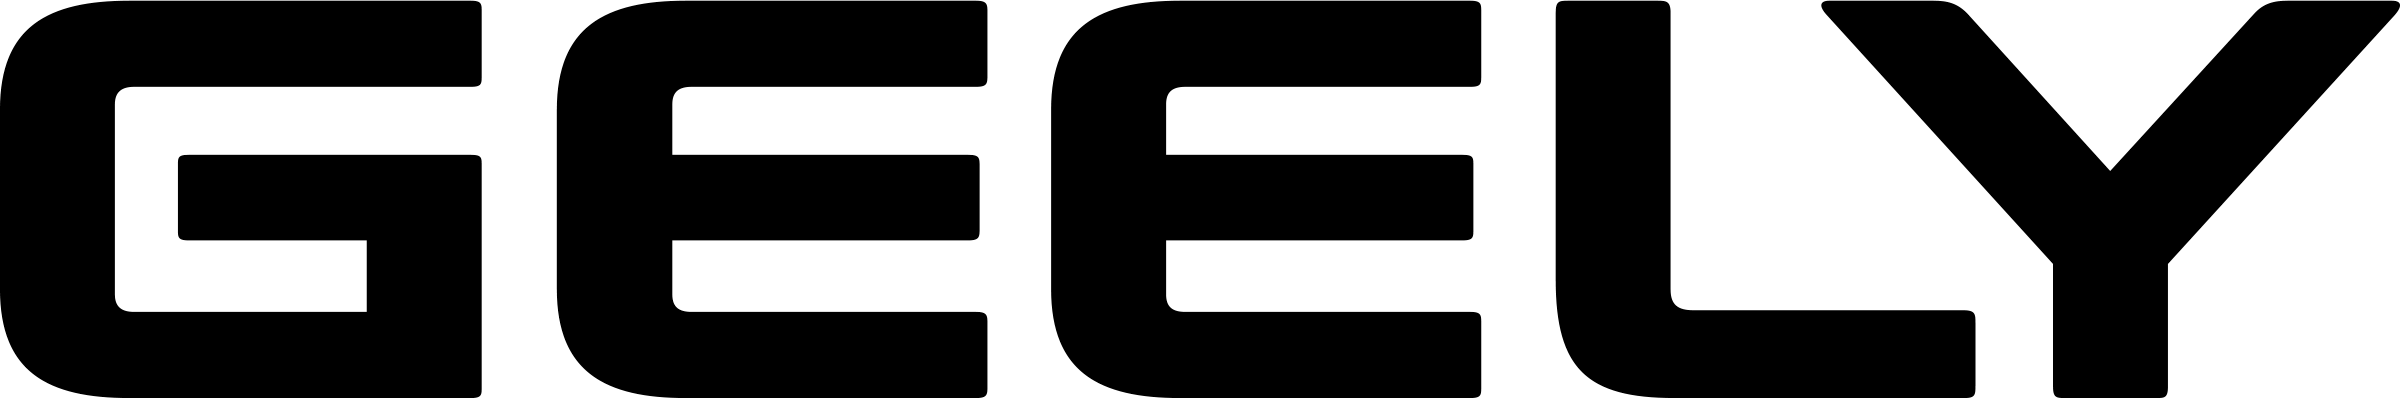 Manufacturer logo for Geely